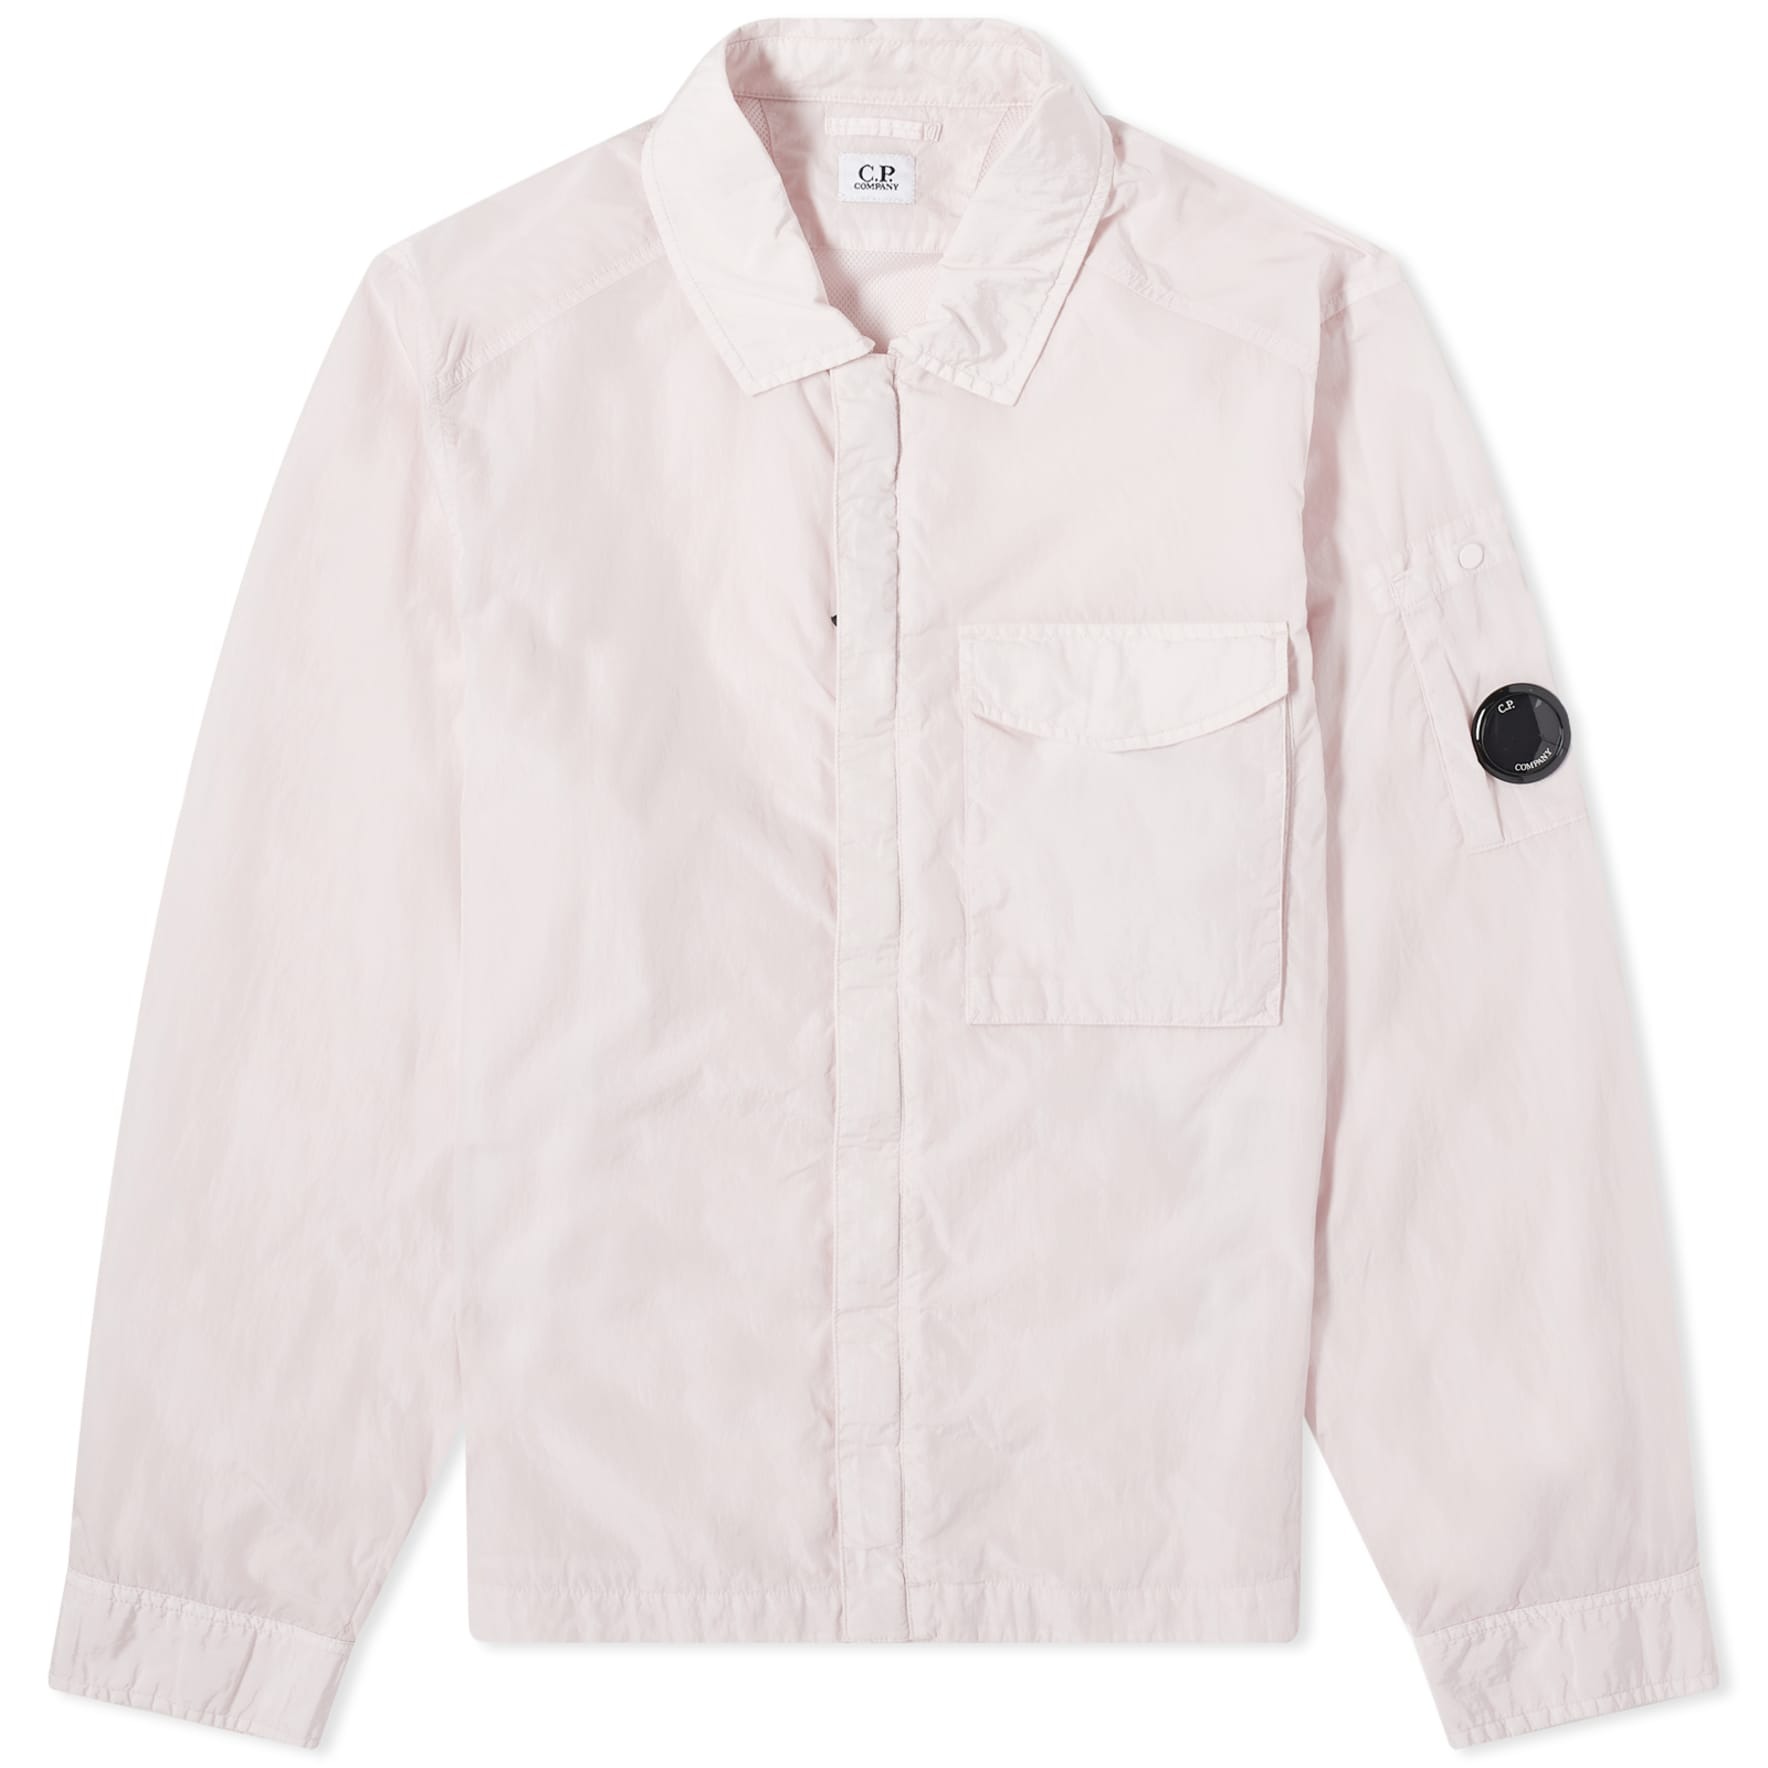 Куртка-рубашка C.P. Company Chrome-R Pocket, бледно-розовый куртка рубашка c p company chrome r pocket светло зеленый